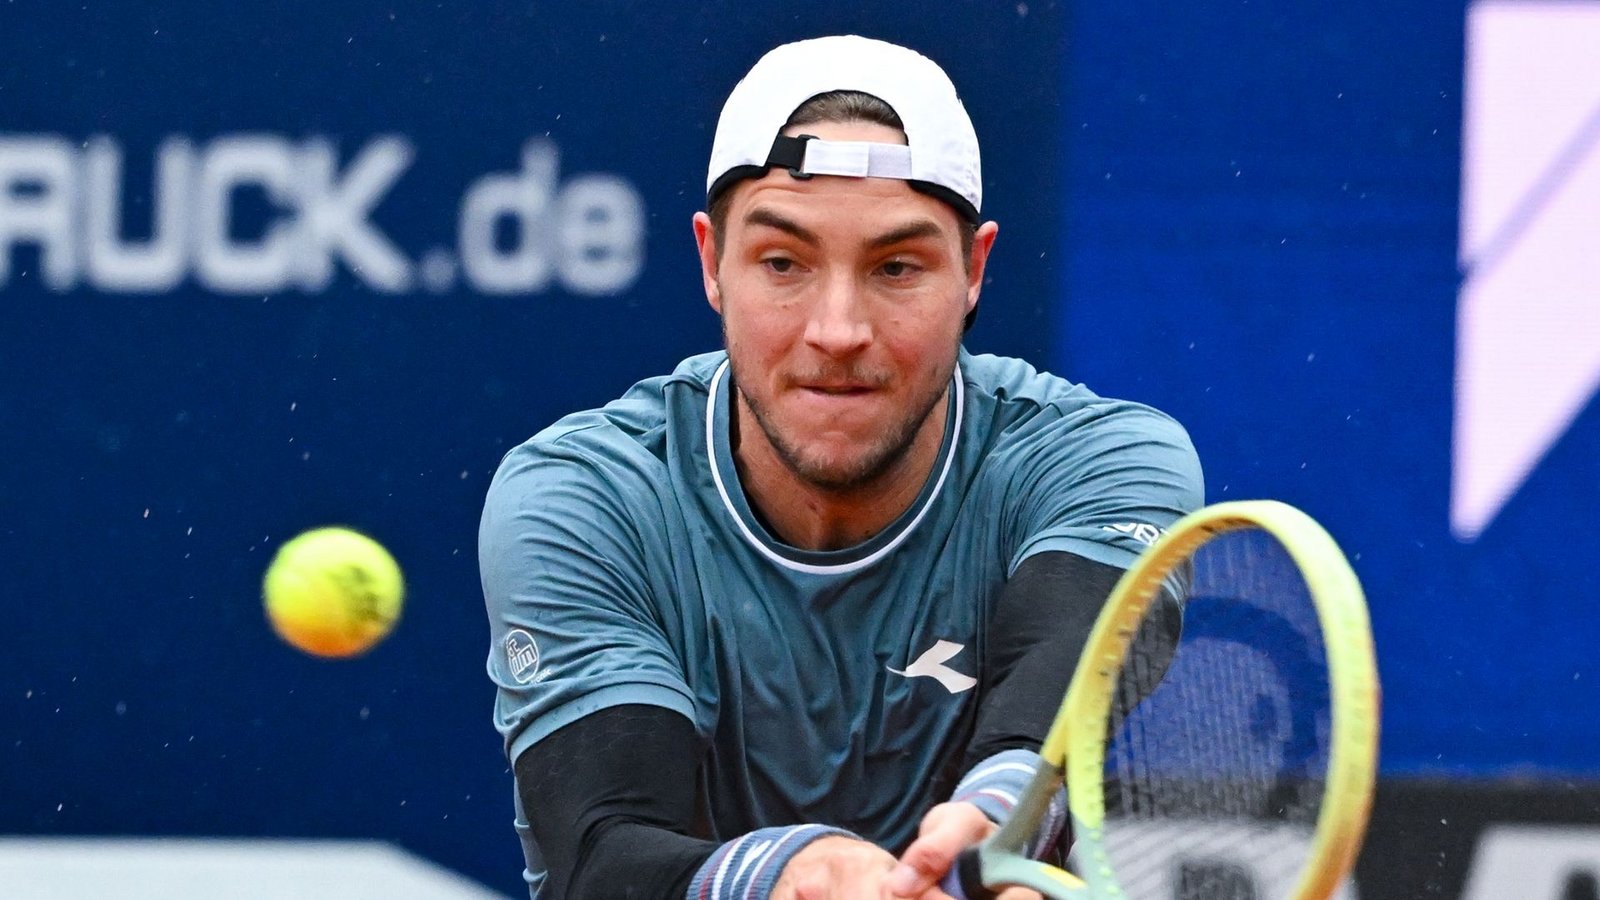 Tennisprofi Jan-Lennard Struff erreichte in München das Halbfinale.<span class='image-autor'>Foto: Sven Hoppe/dpa</span>